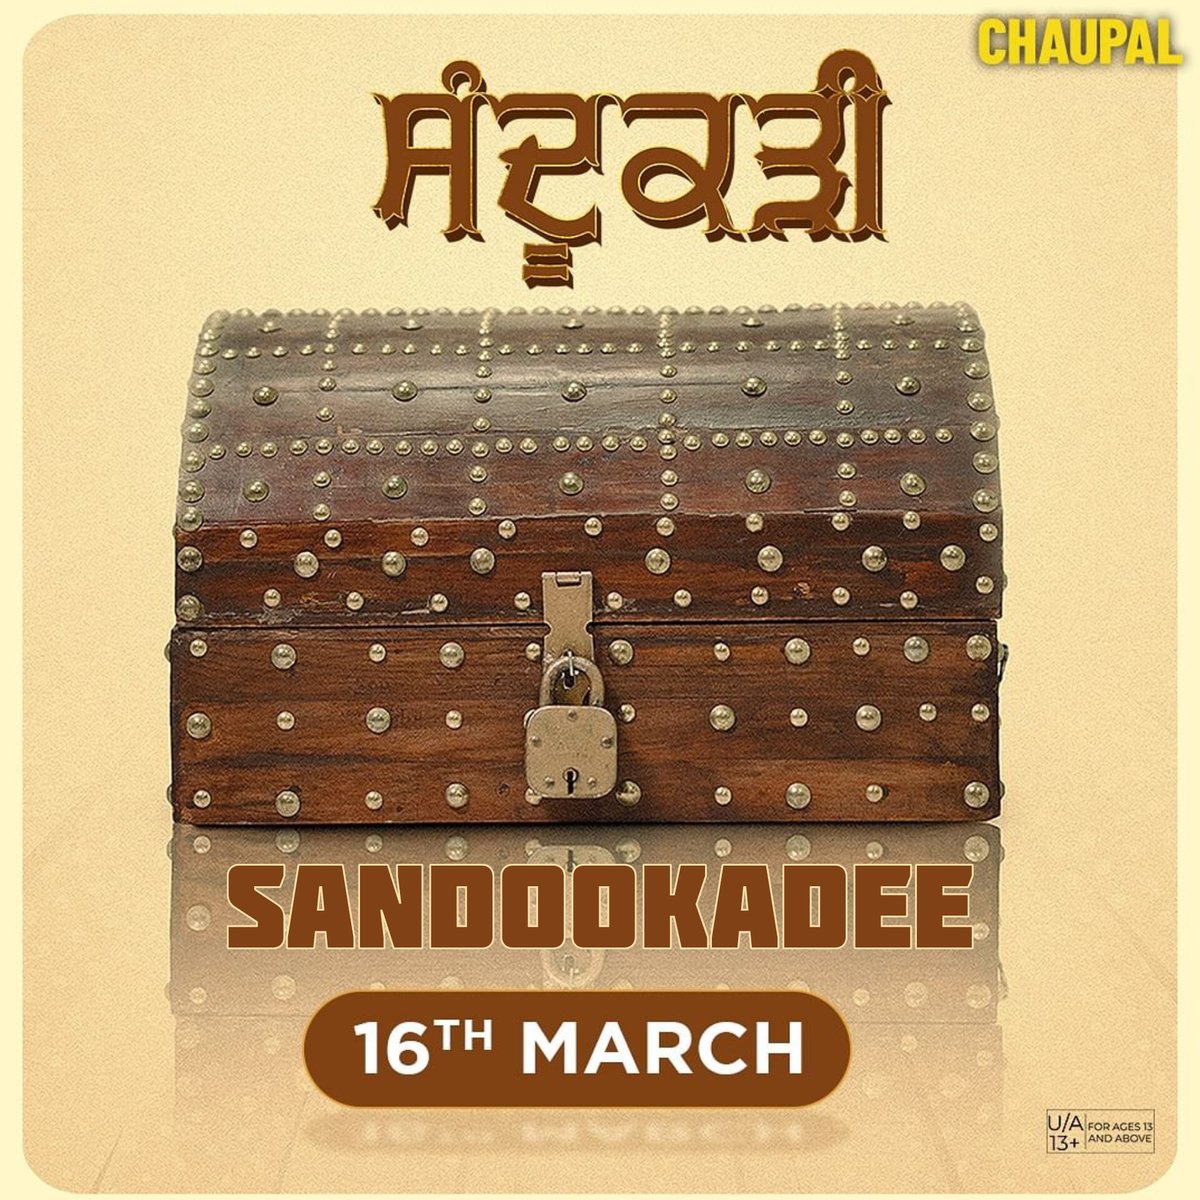 Punjabi Film #Sandookadee Streaming From 16th March On #ChaupalApp.
Starring: #AshishDuggal, #MahabirBhullar, #JatinderKaur, #NaginderGakhar, #SatwantKaur, #SunnyGill, #DeepMandeep& More.
Written & Directed By #PrabhjotSinghCheema.

#SandookadeeOnChaupal #PunjabiFilm #MovieSpy